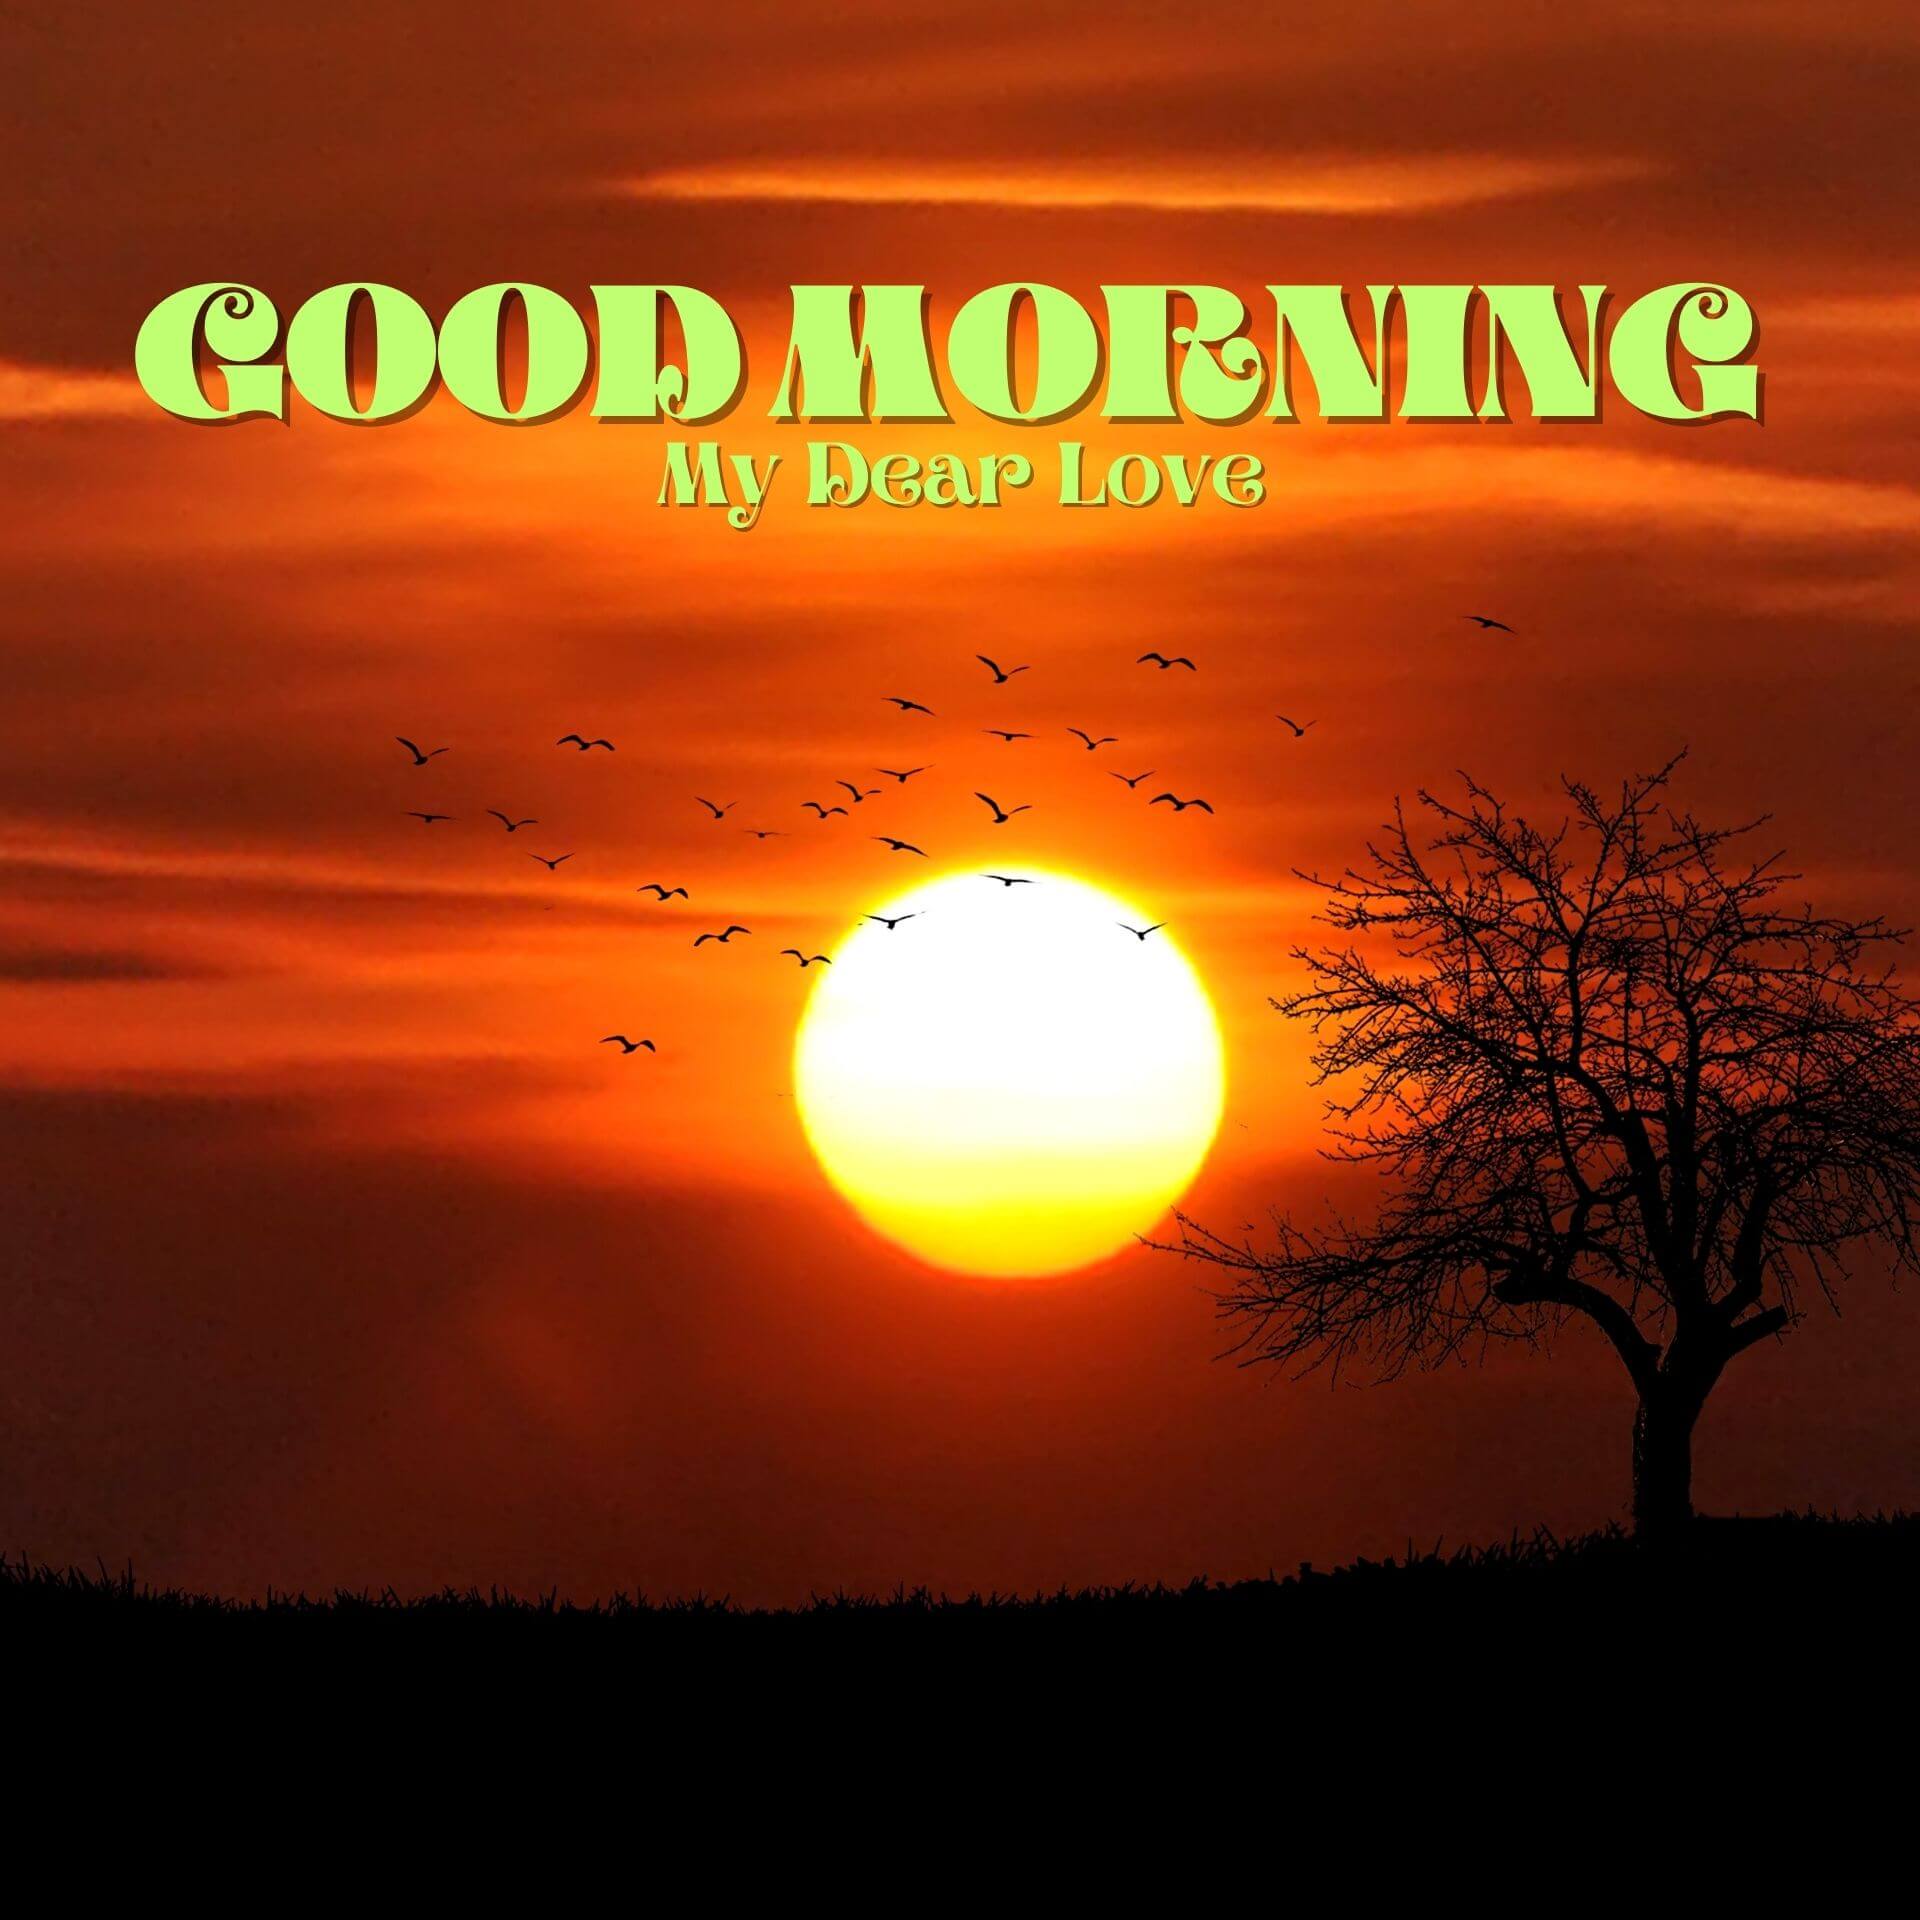 Romantic Good Morning photo Free Download 2